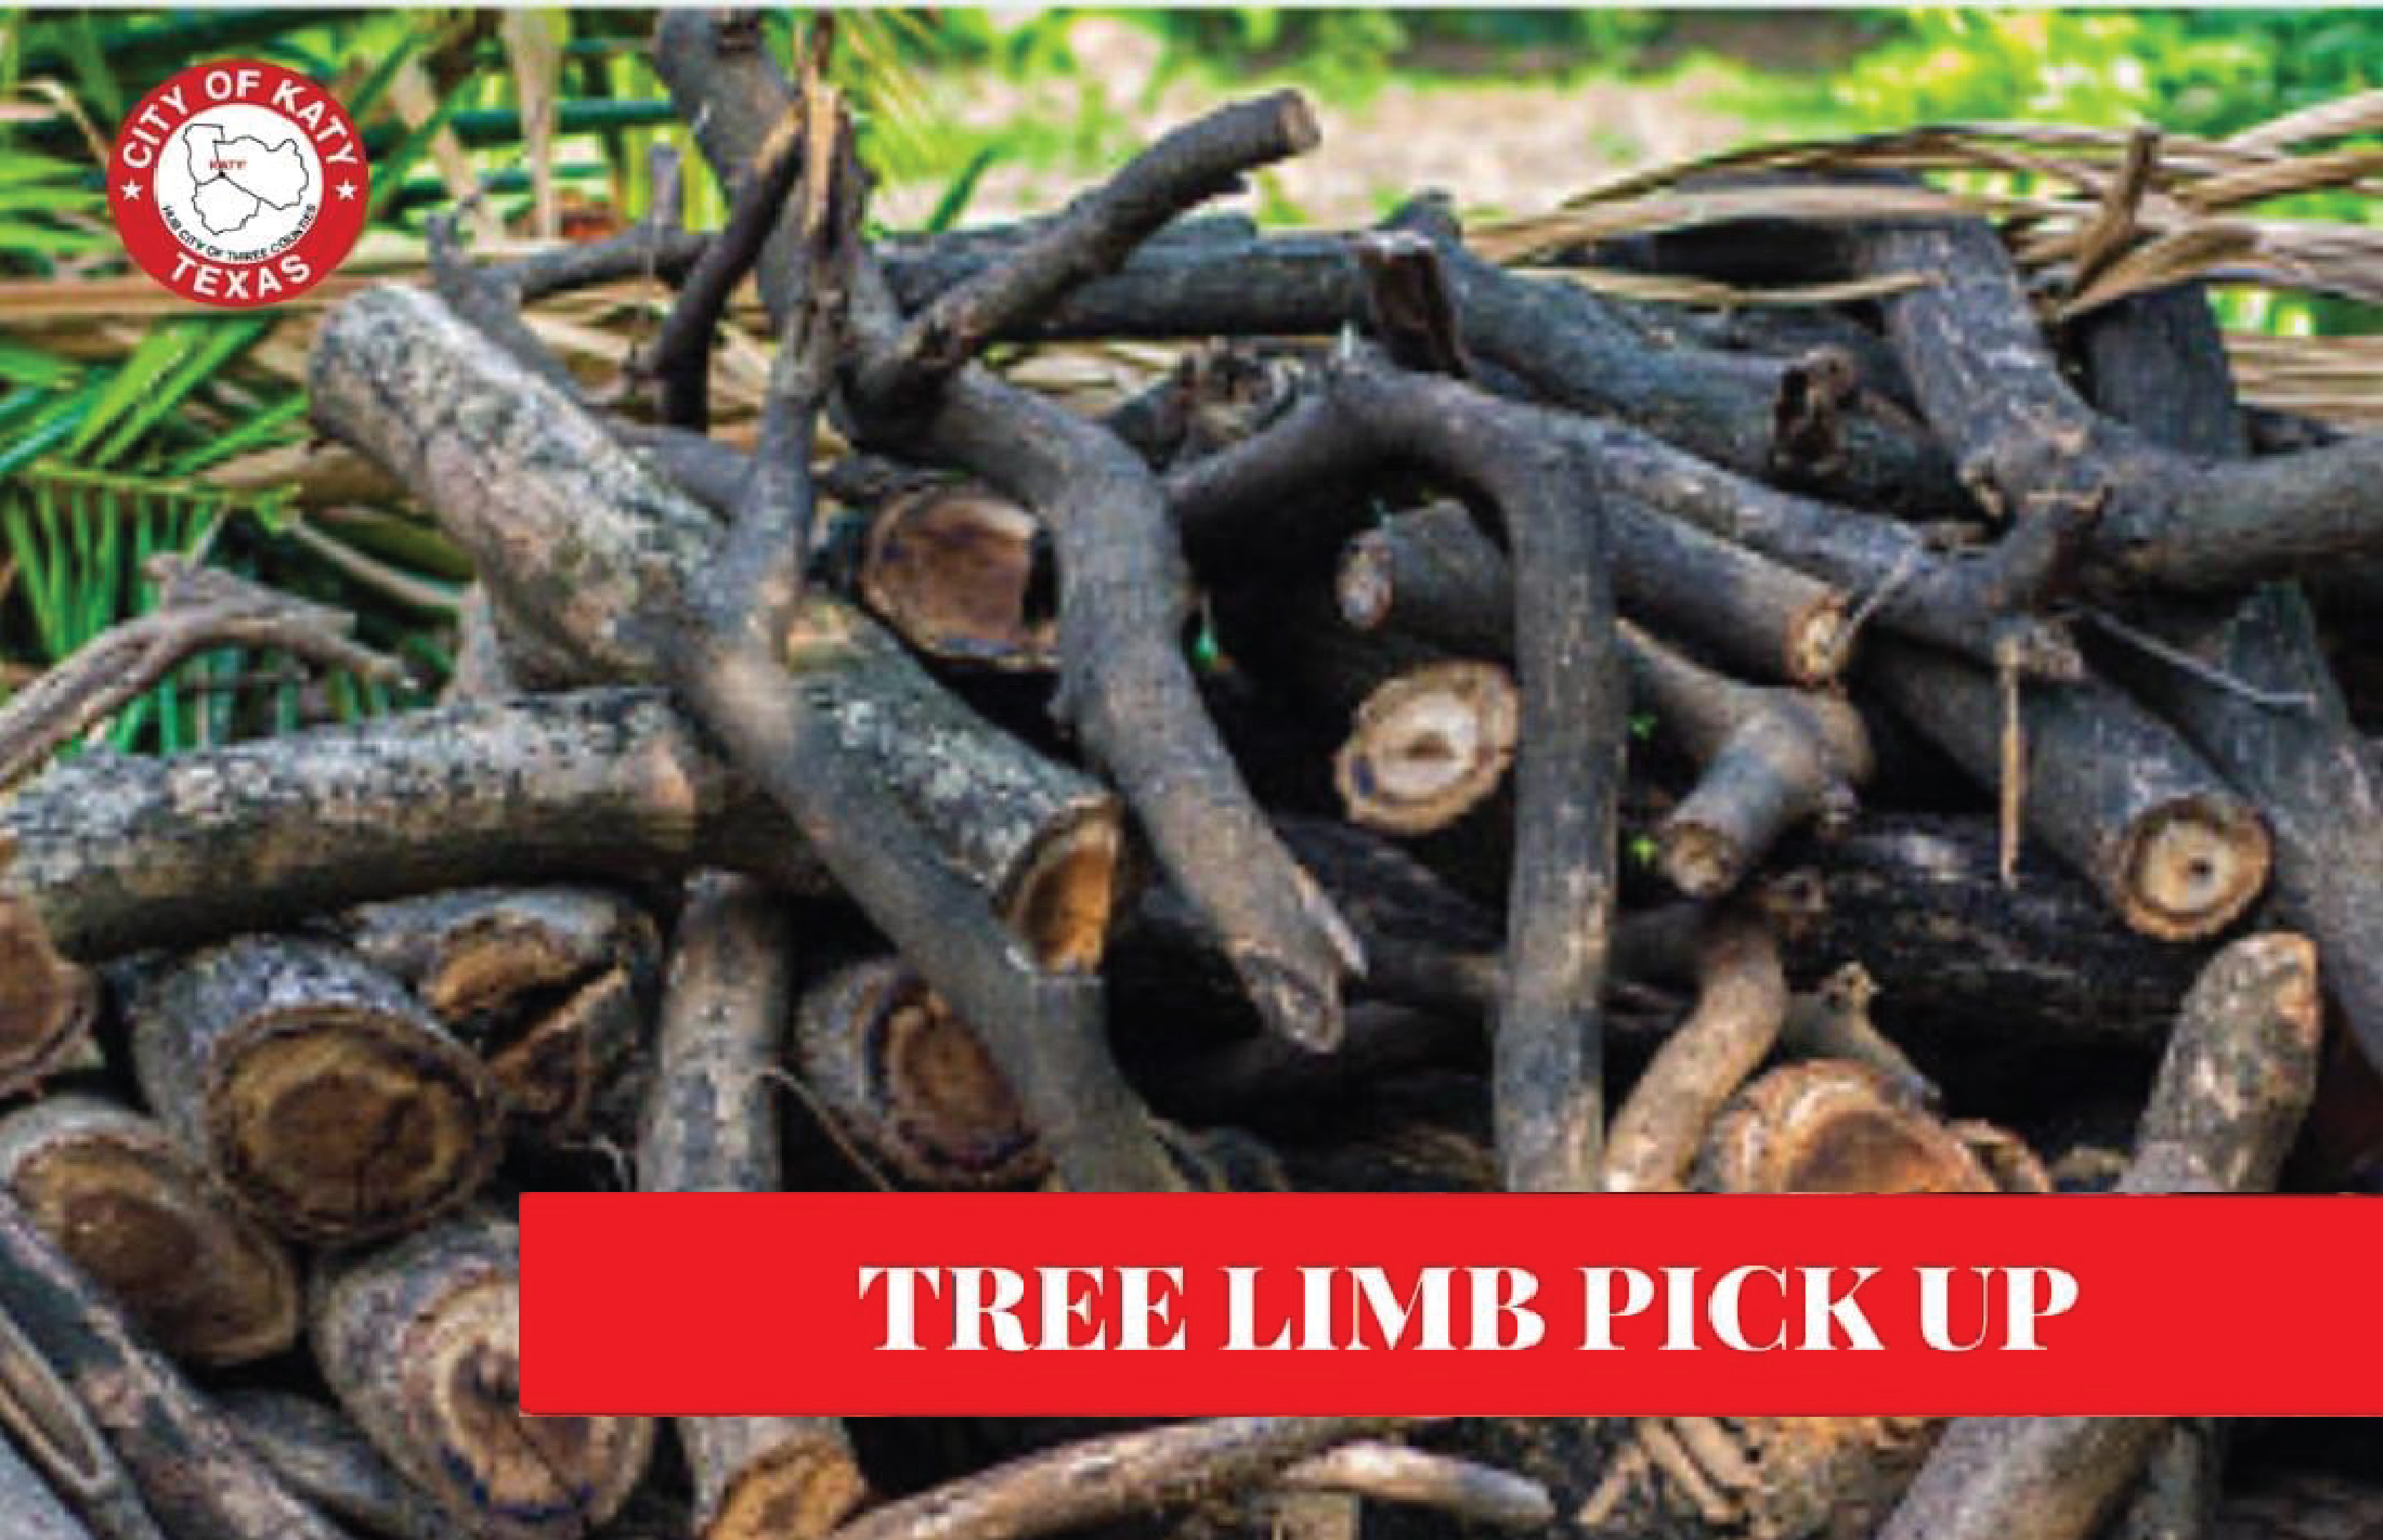 City of Katy Public Works to Perform Quarterly Tree Limb Pickup